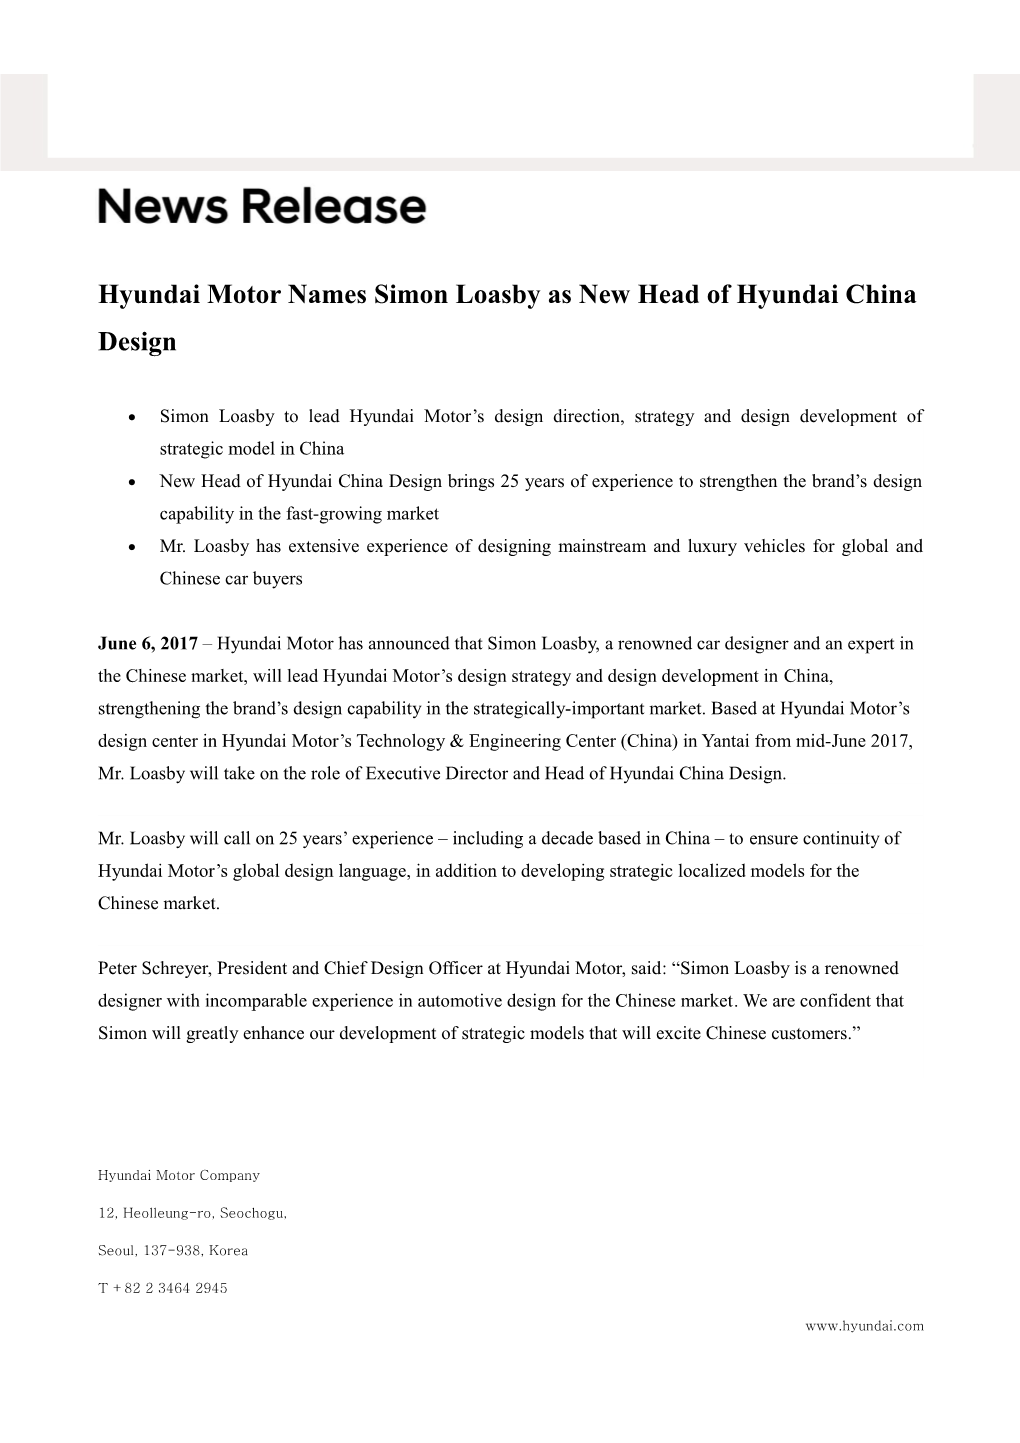 Hyundai Motor Names Simon Loasby As New Head of Hyundai China Design